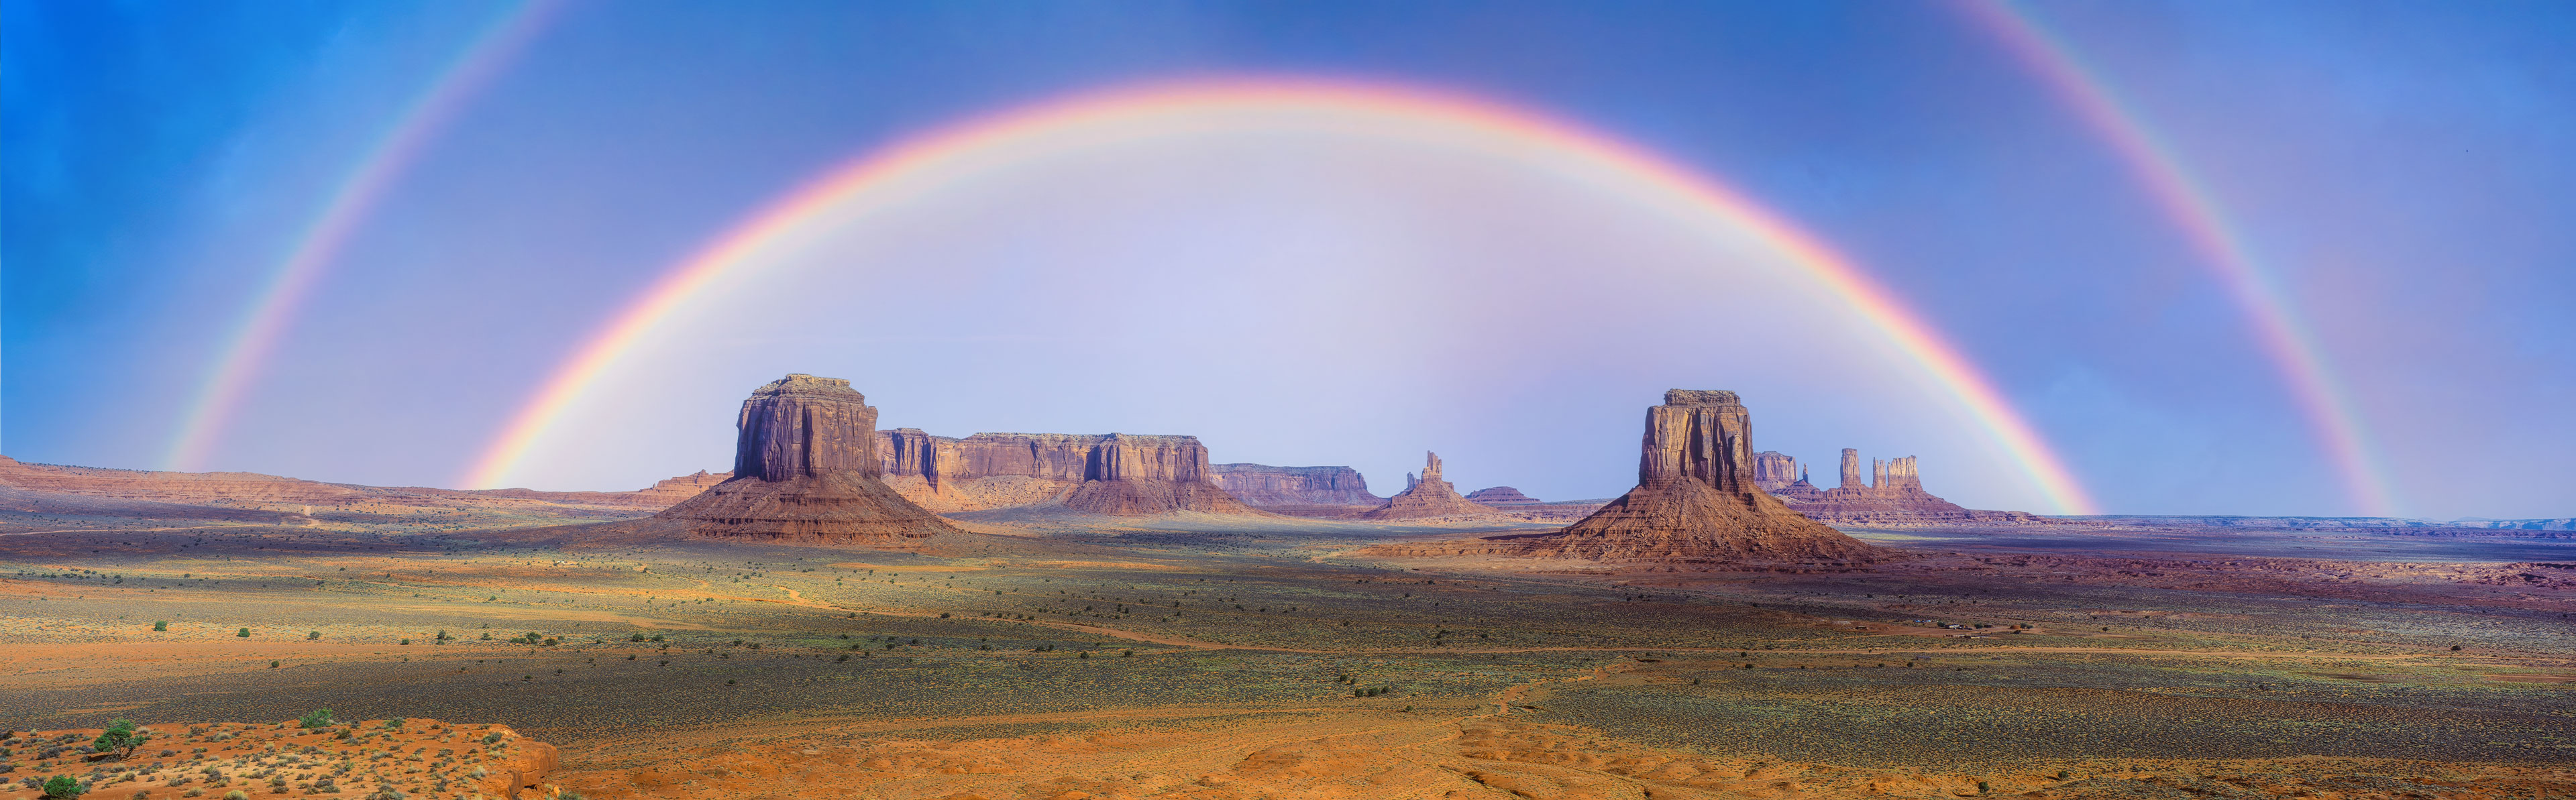 Monument Valley Navajo Tribal Park, Utah, USA 